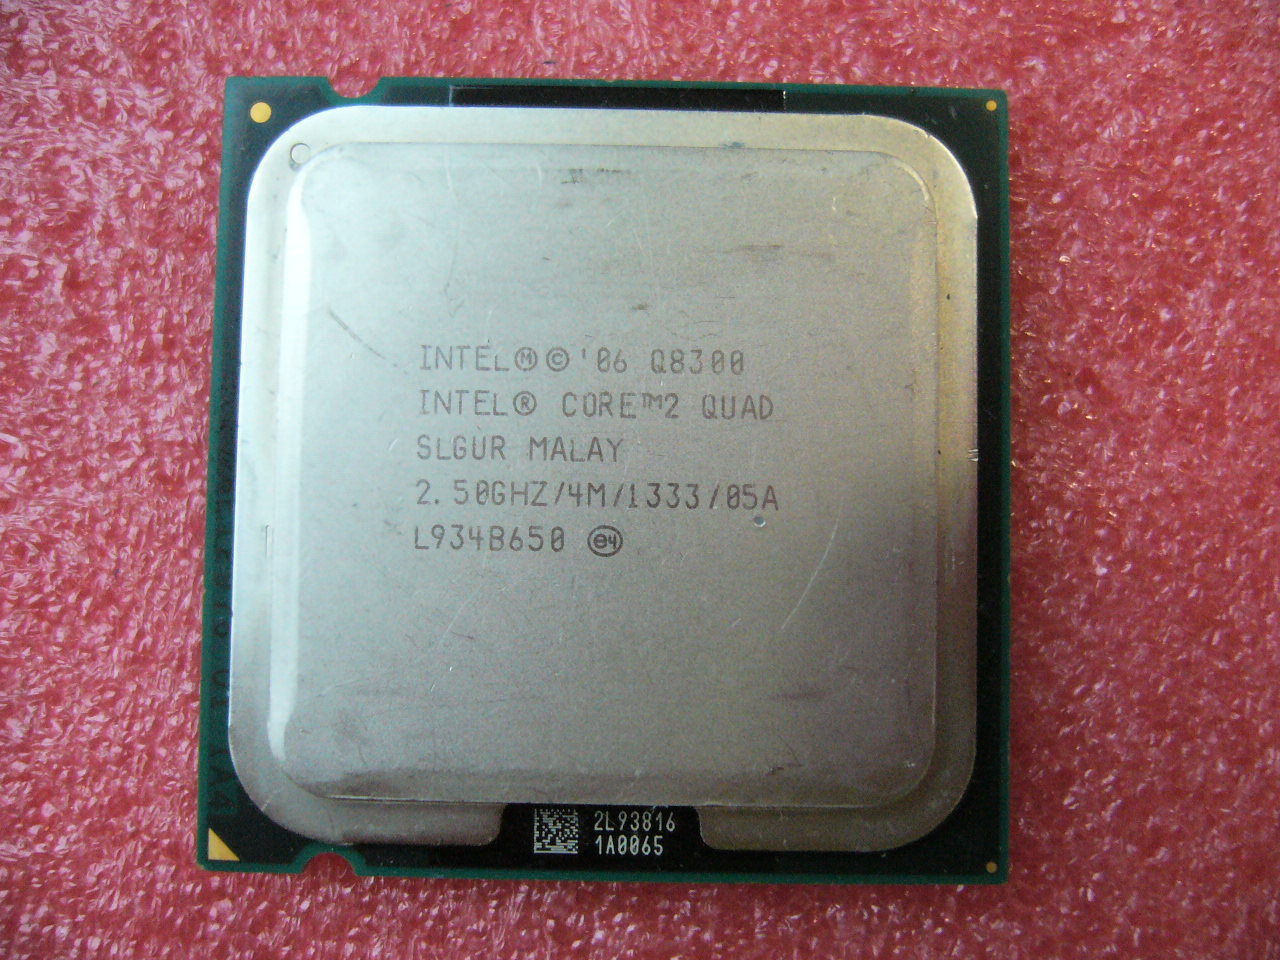 QTY 1x INTEL Core2 Quad Q8300 CPU 2.50GHz/4MB/1333Mhz LGA775 SLGUR SLB5W - zum Schließen ins Bild klicken